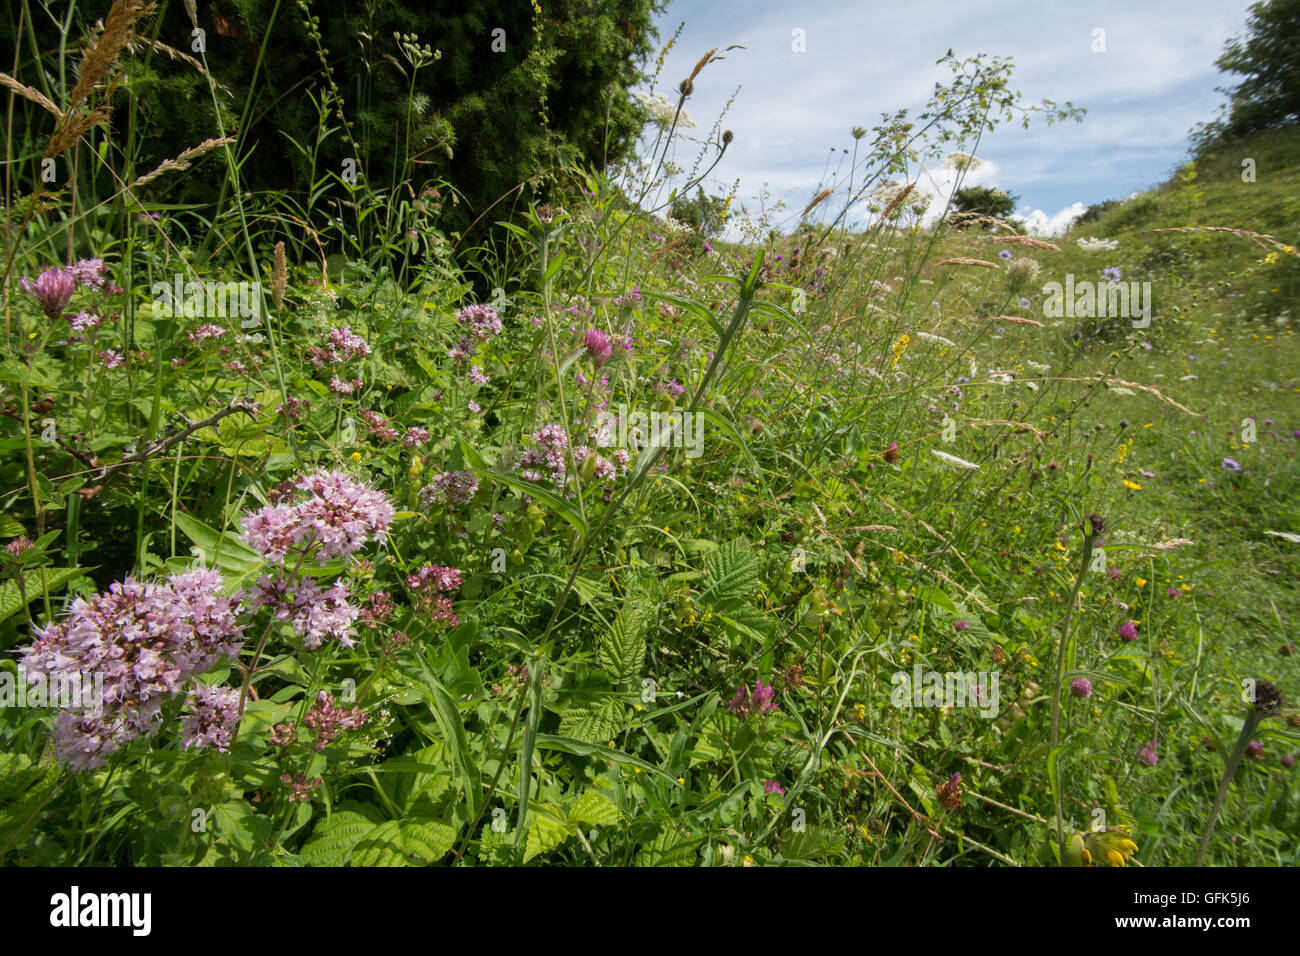 Wildflowers in chalk downland meadow habitat at Noar Hill, Hampshire, UK Stock Photo